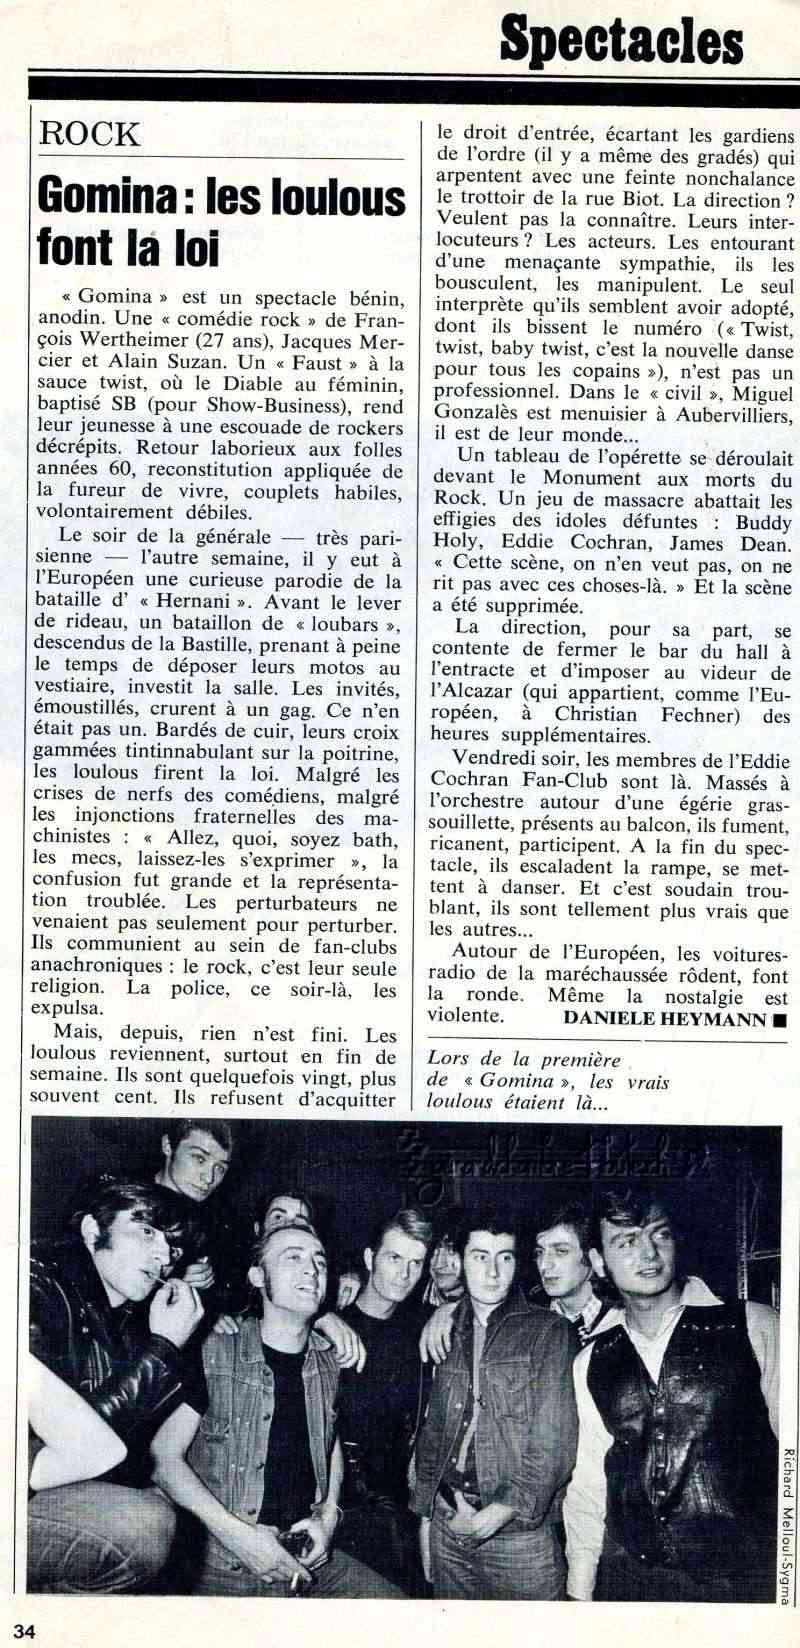 Gomina - le premier opera rock français - 1974 Articl13